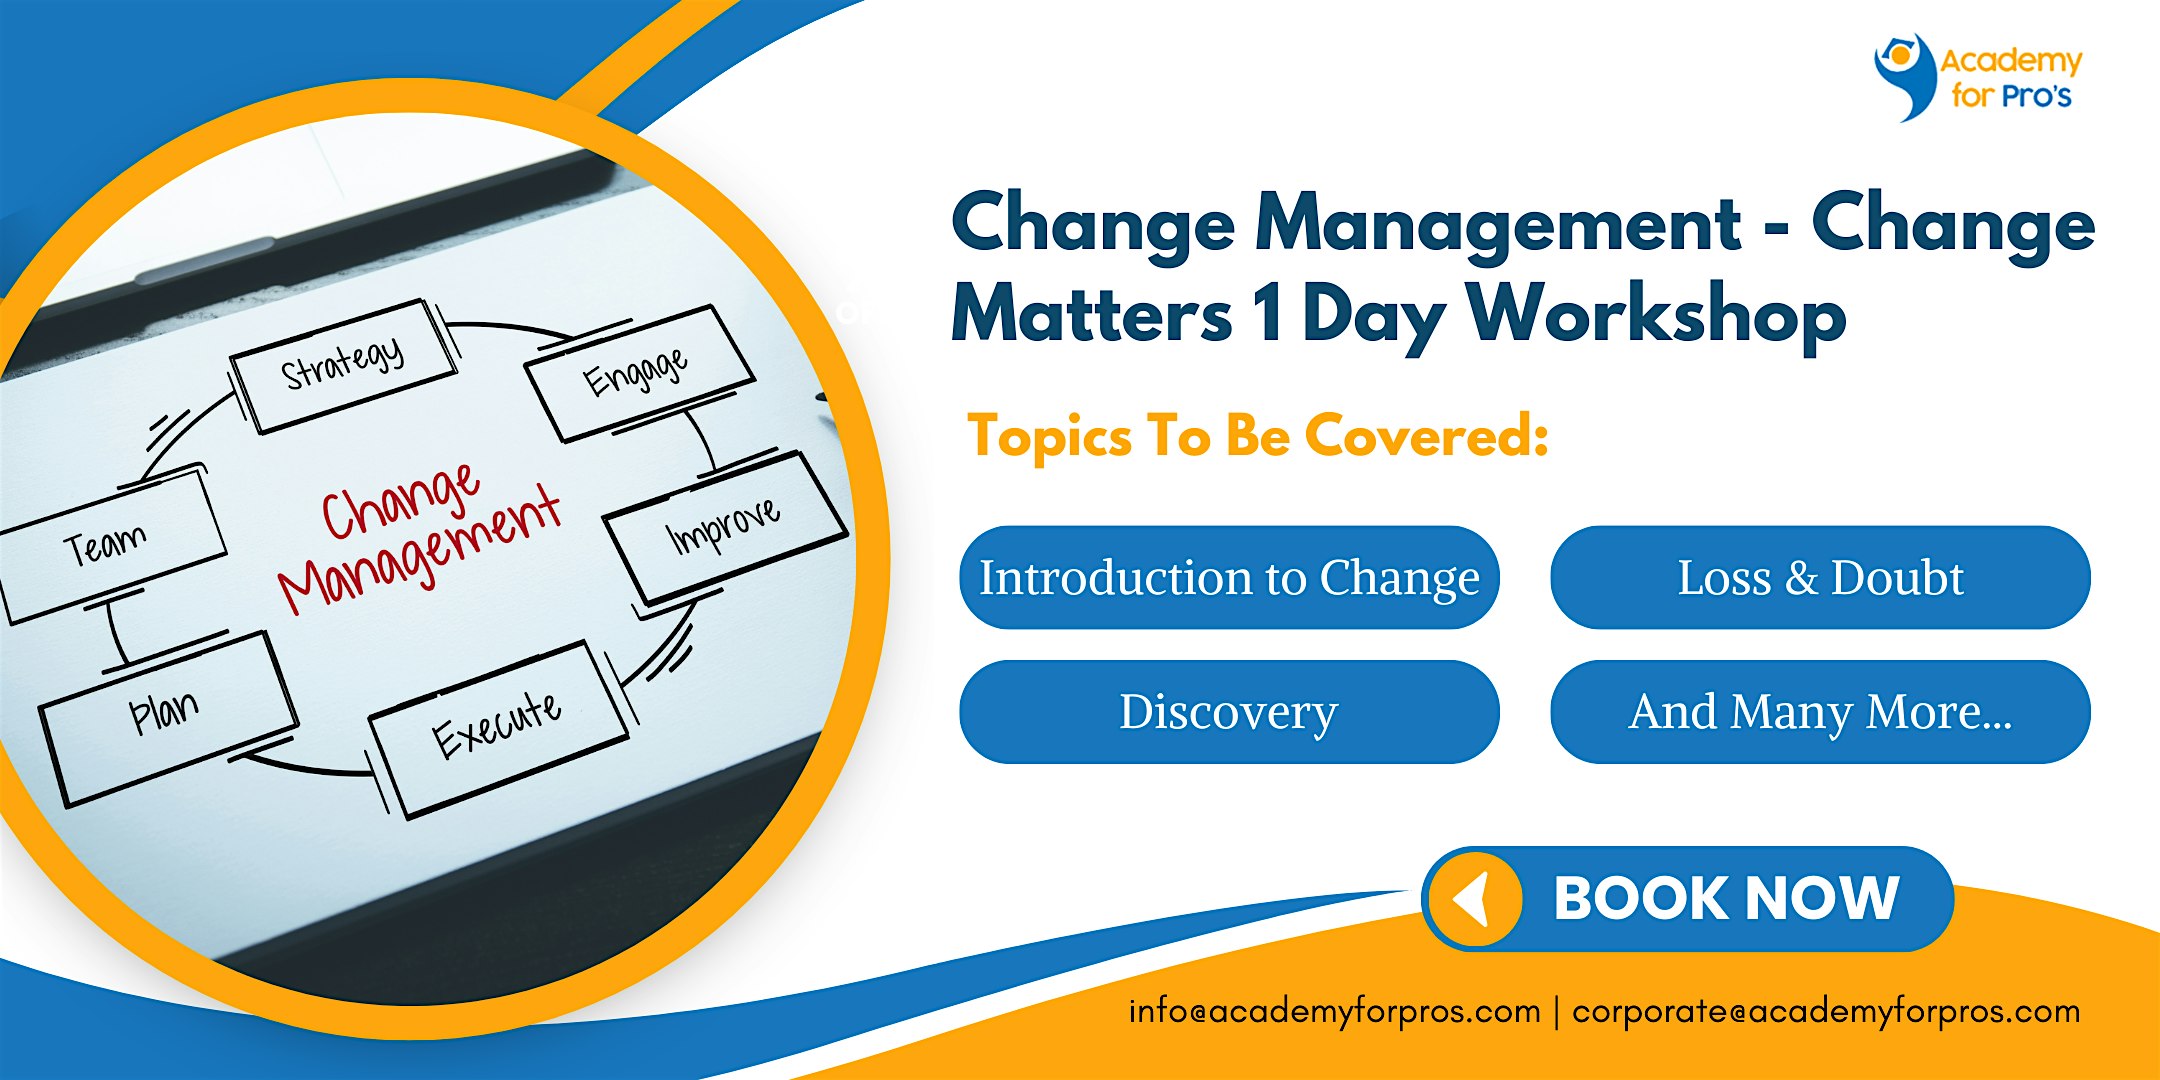 Change Management - Change Matters 1 Day Workshop in Laredo, TX